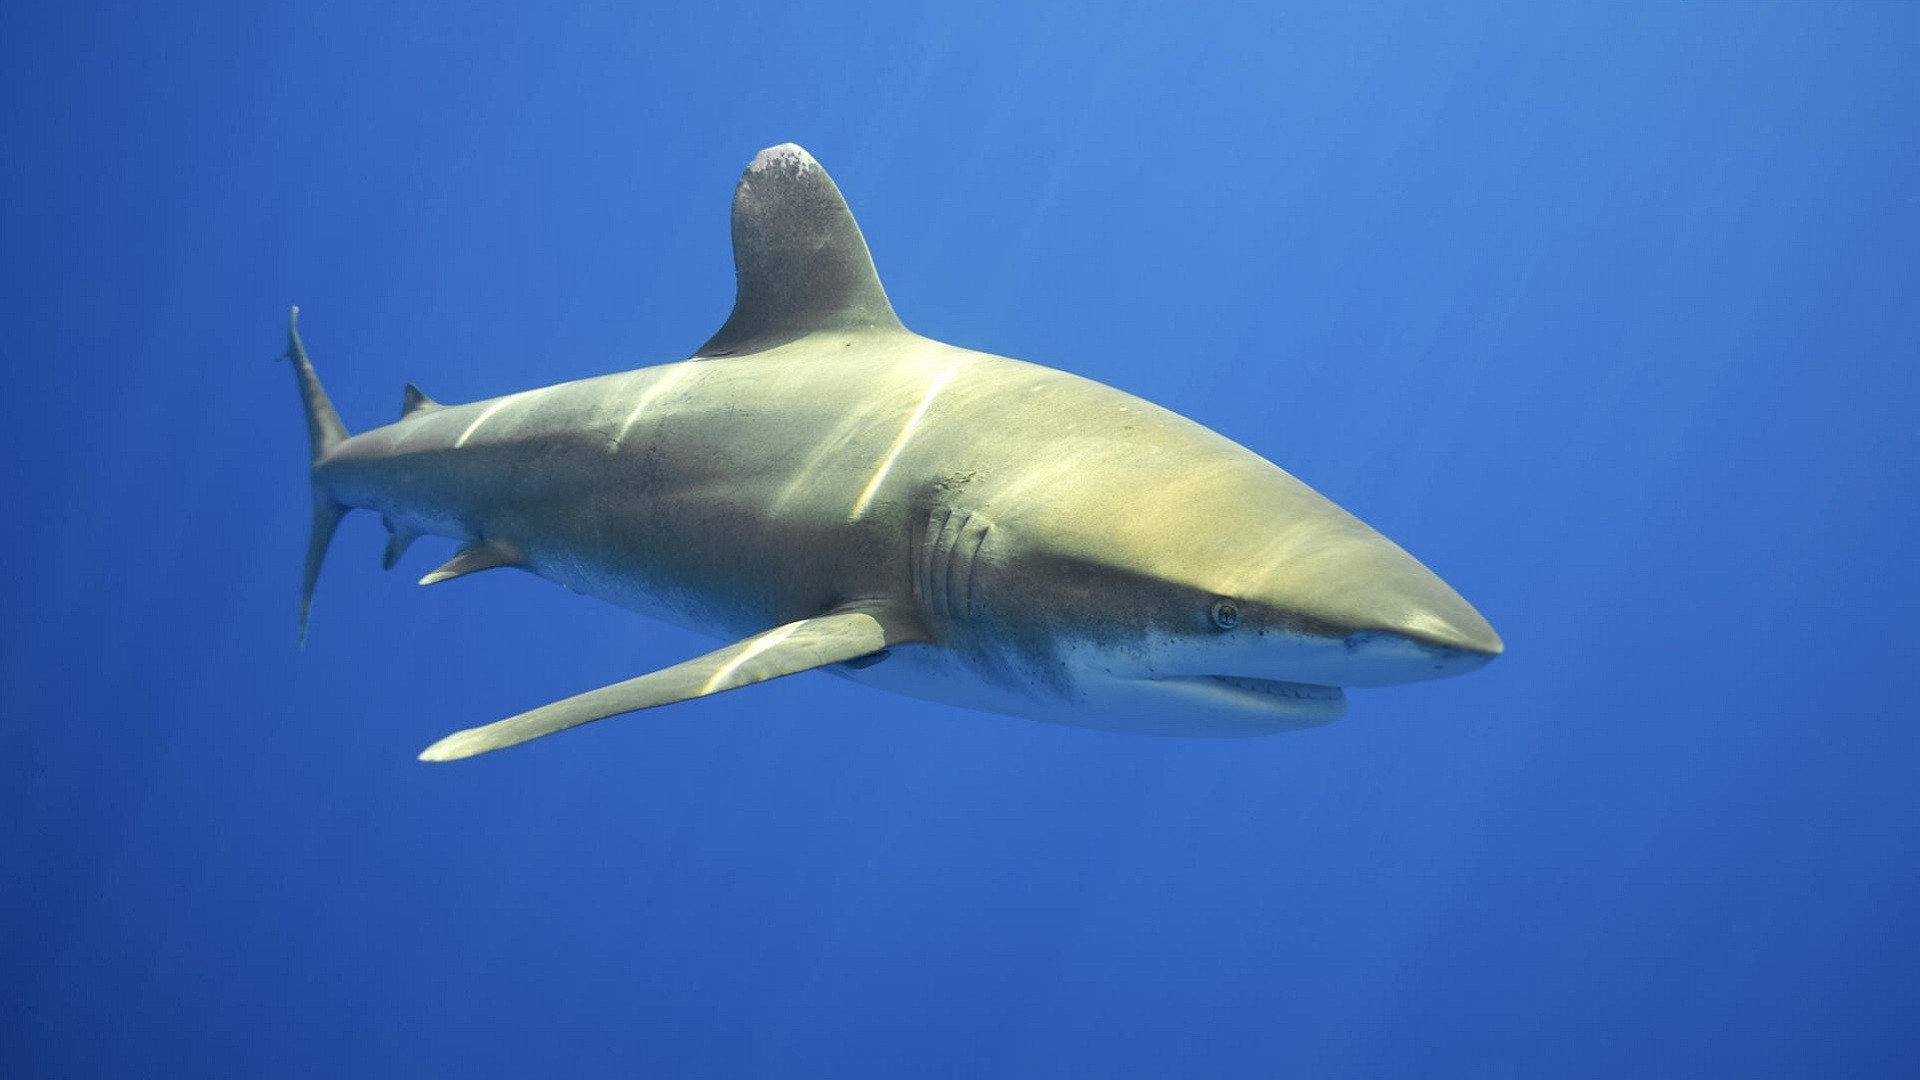 General 1920x1080 shark calm waters Pacific Ocean Great White Shark animals underwater fish